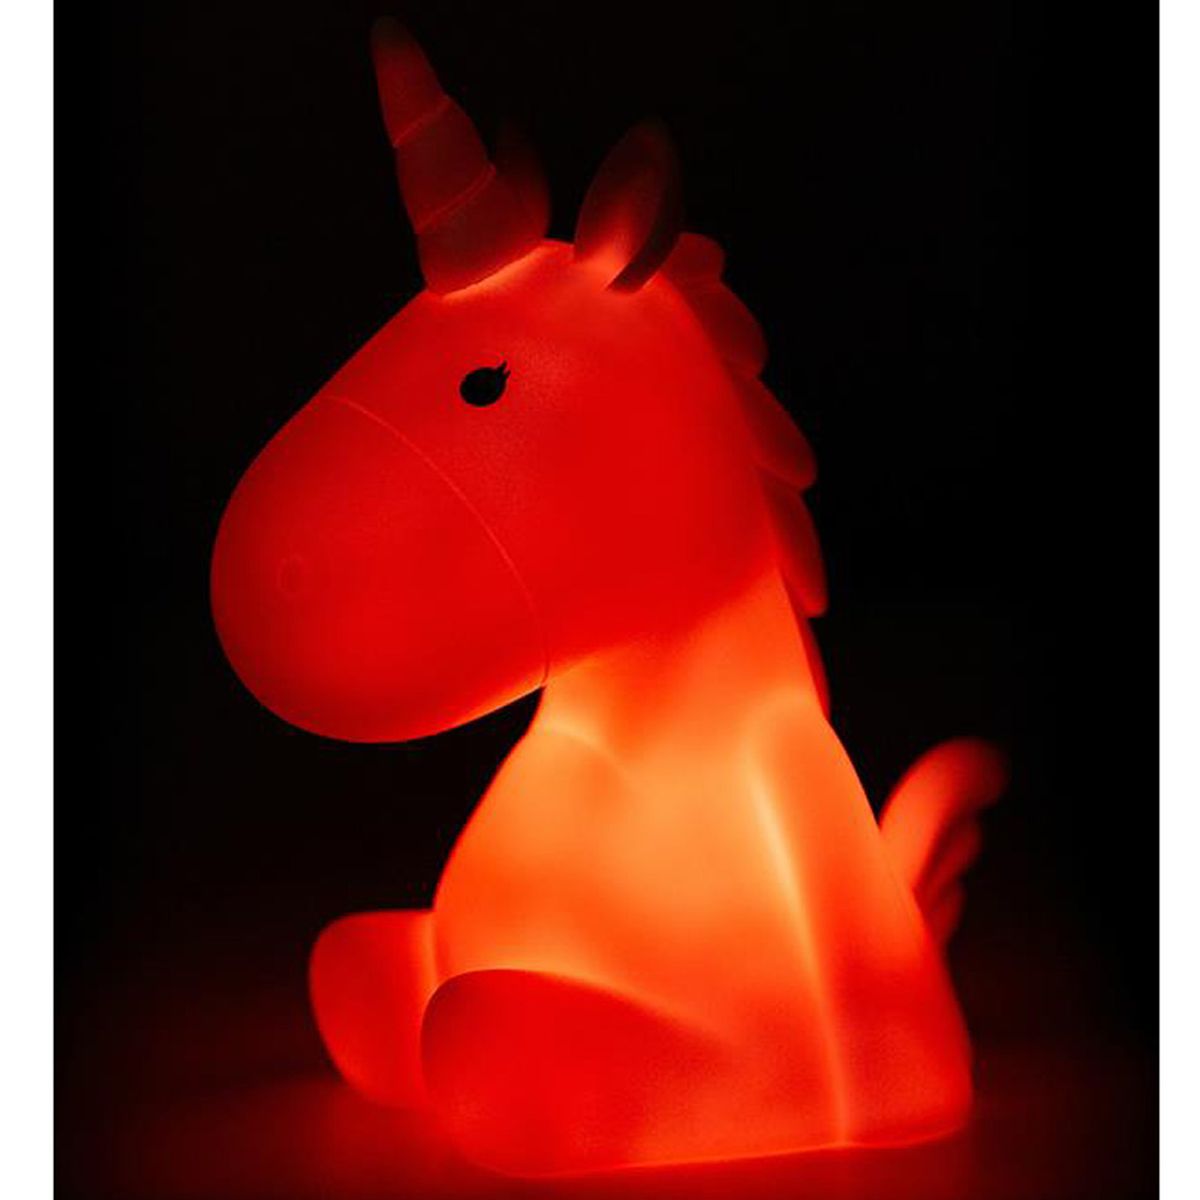 LED Unicorn Nightlight - Pink